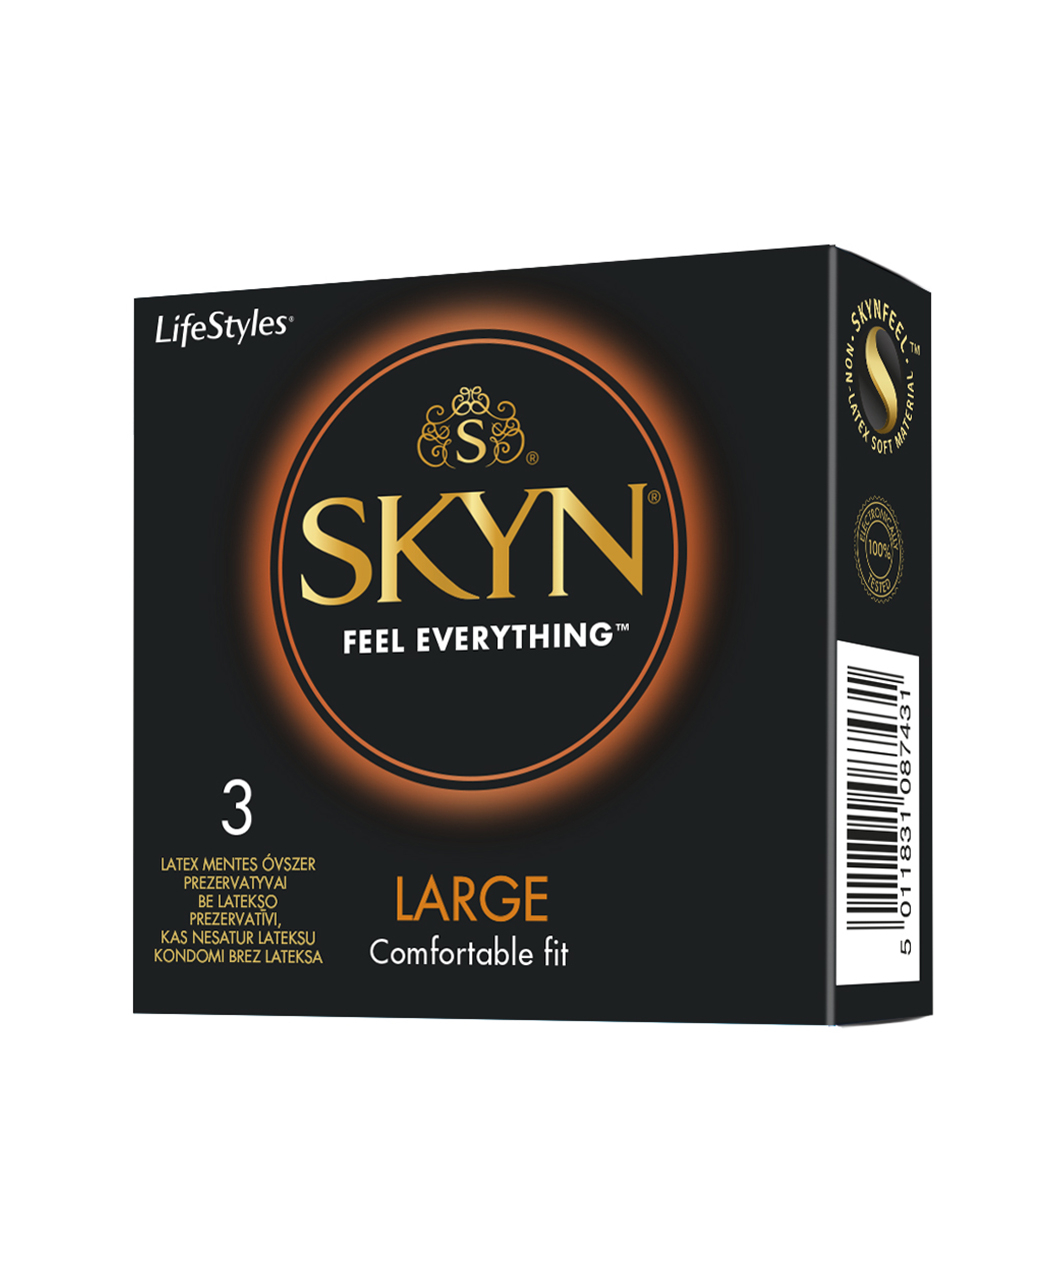 SKYN King Size prezervatīvi (3 / 10 gab.)